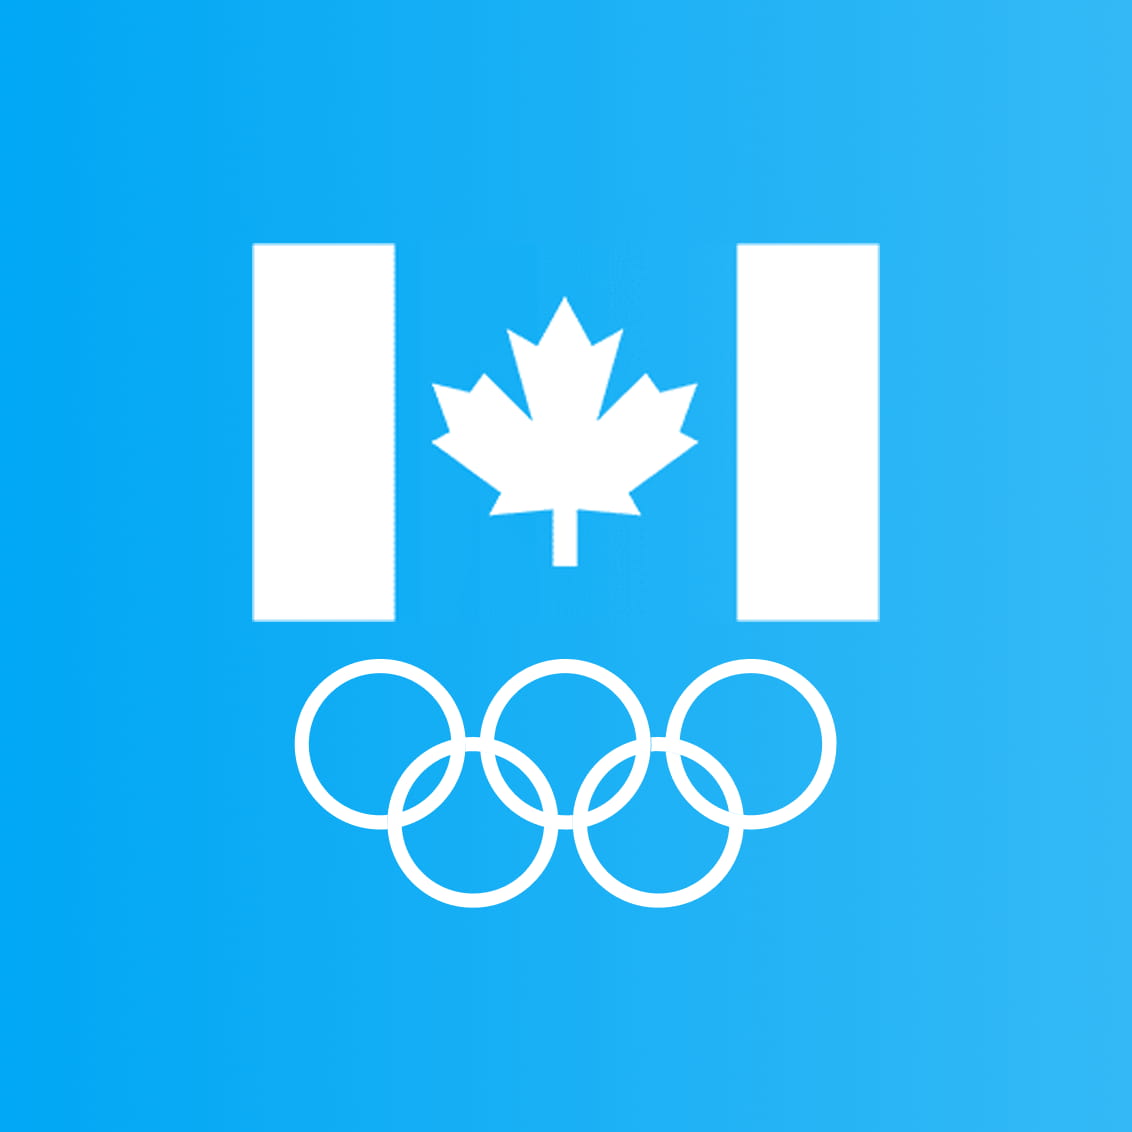 Team Canada Olympics logo